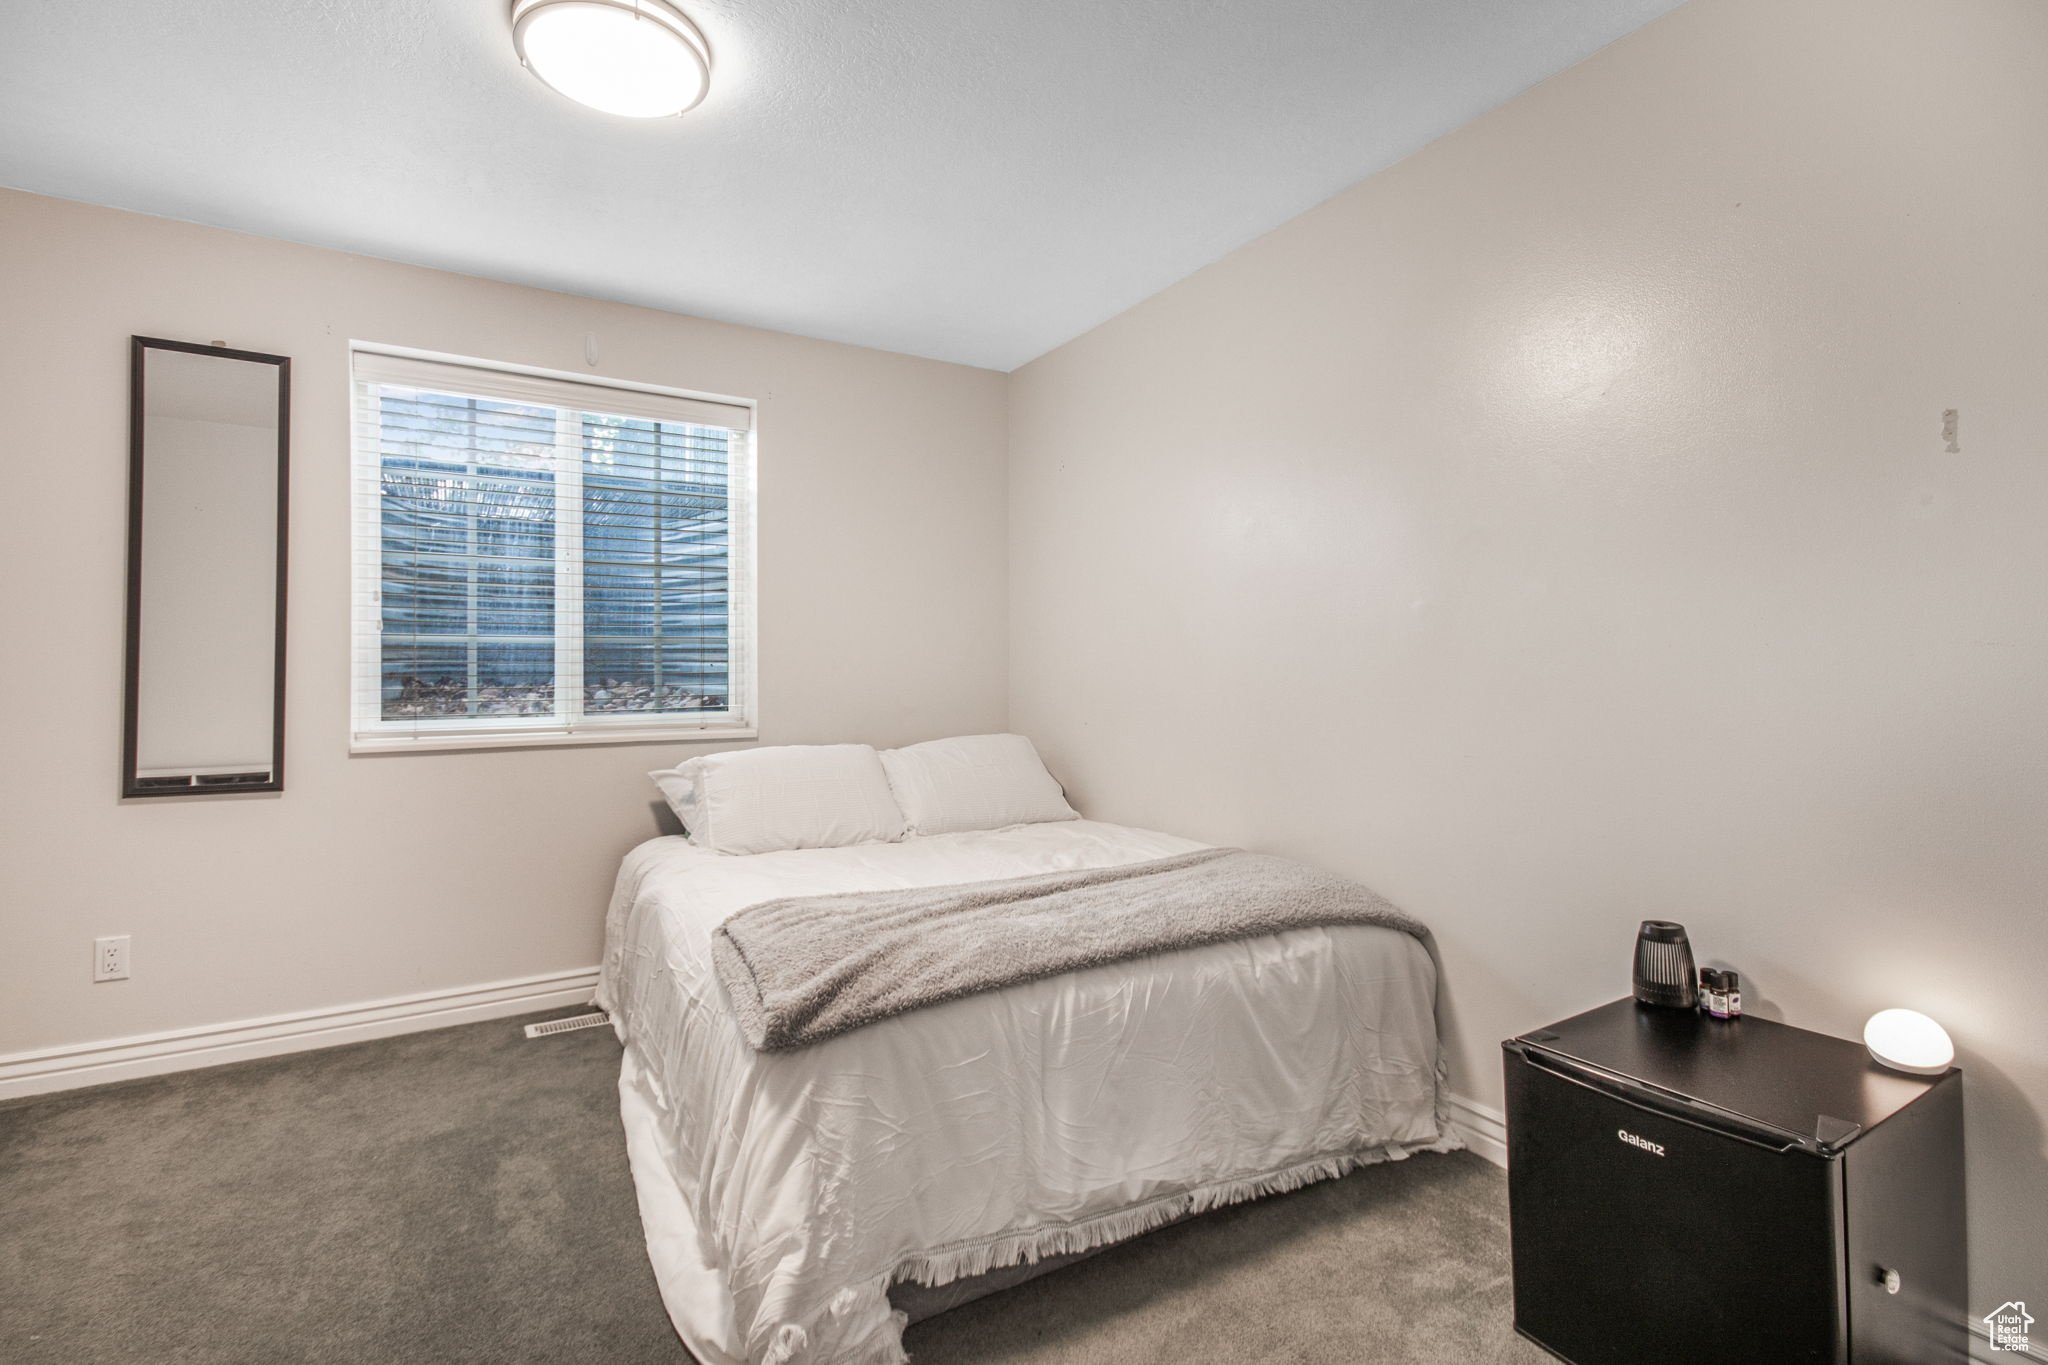 136 N 200 E, Santaquin, Utah 84655, 6 Bedrooms Bedrooms, 21 Rooms Rooms,3 BathroomsBathrooms,Residential,For sale,200,1995010